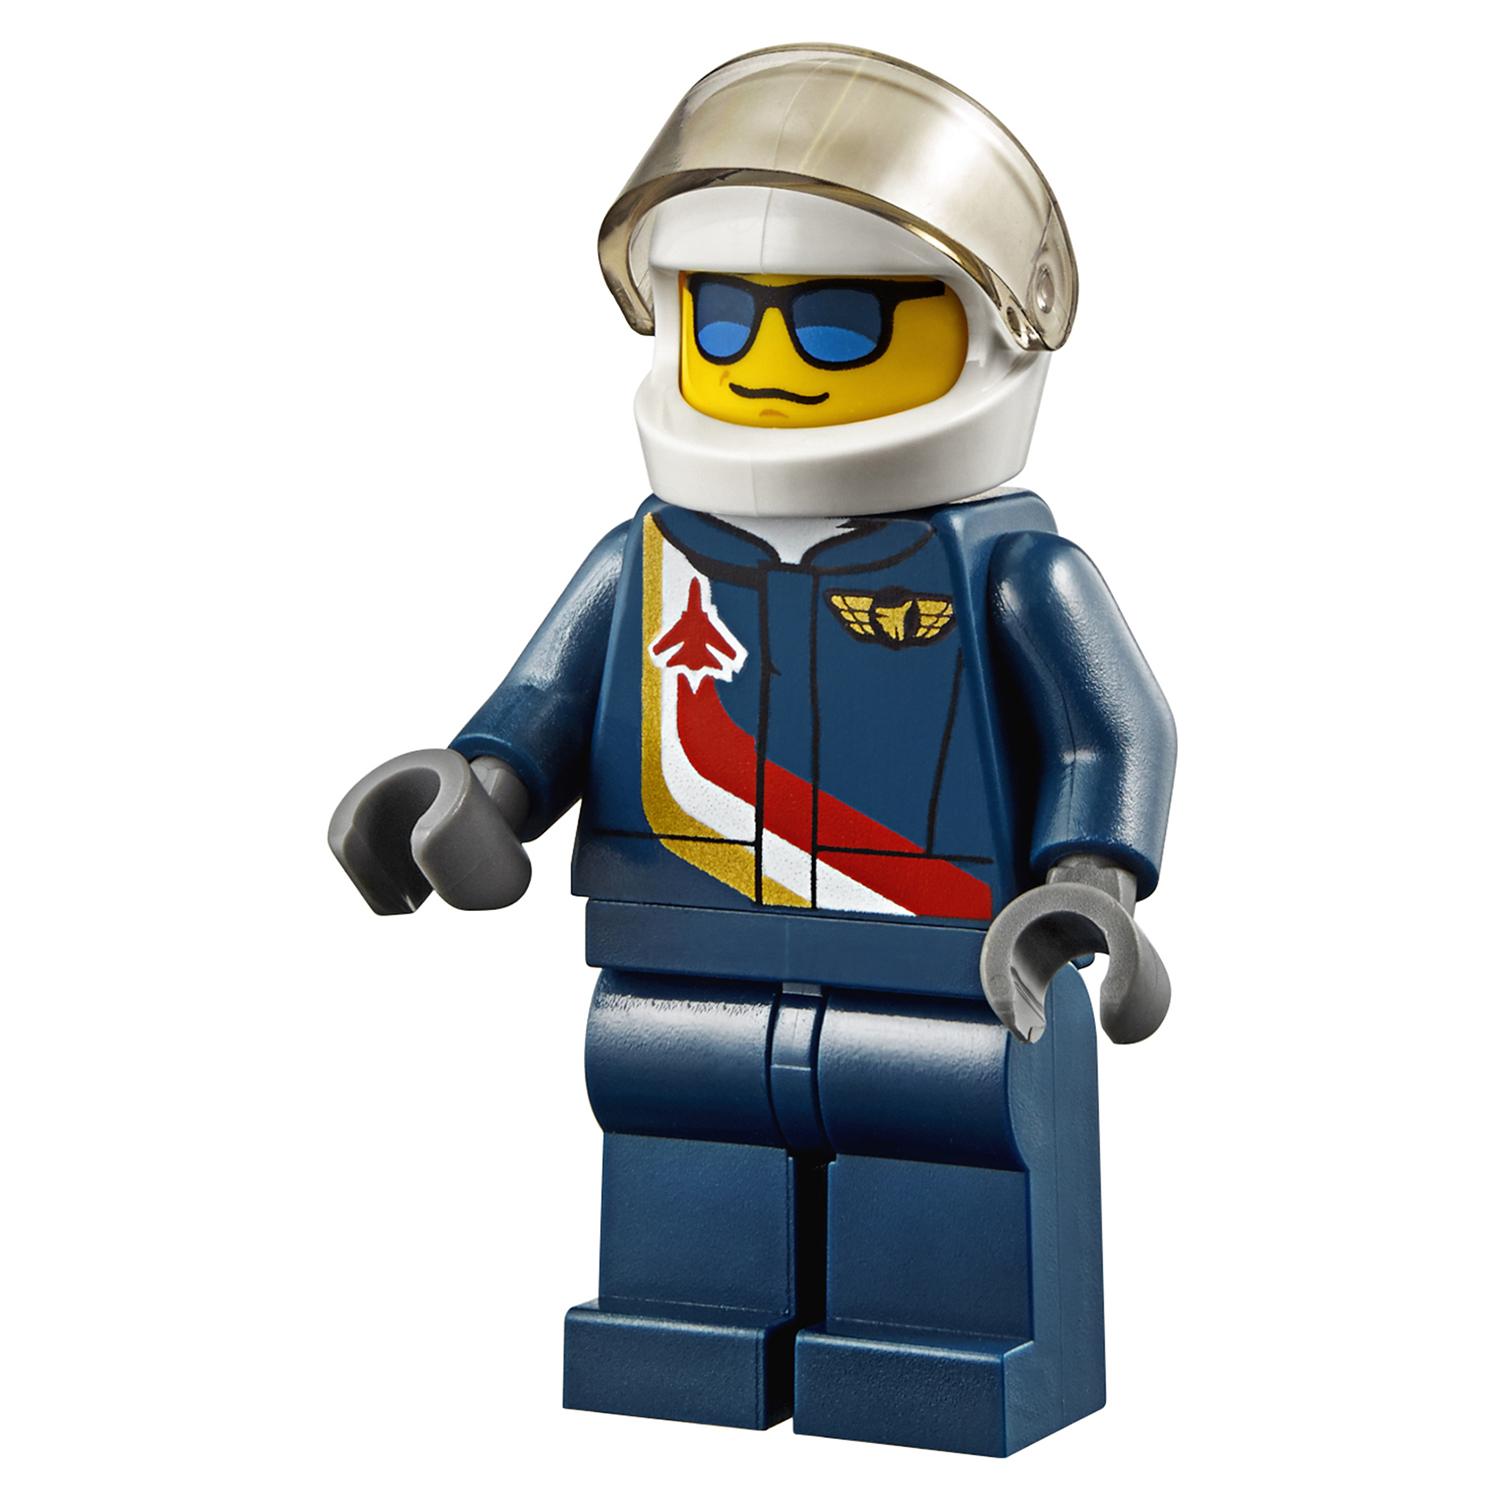 Lego City 60177 Реактивный самолёт